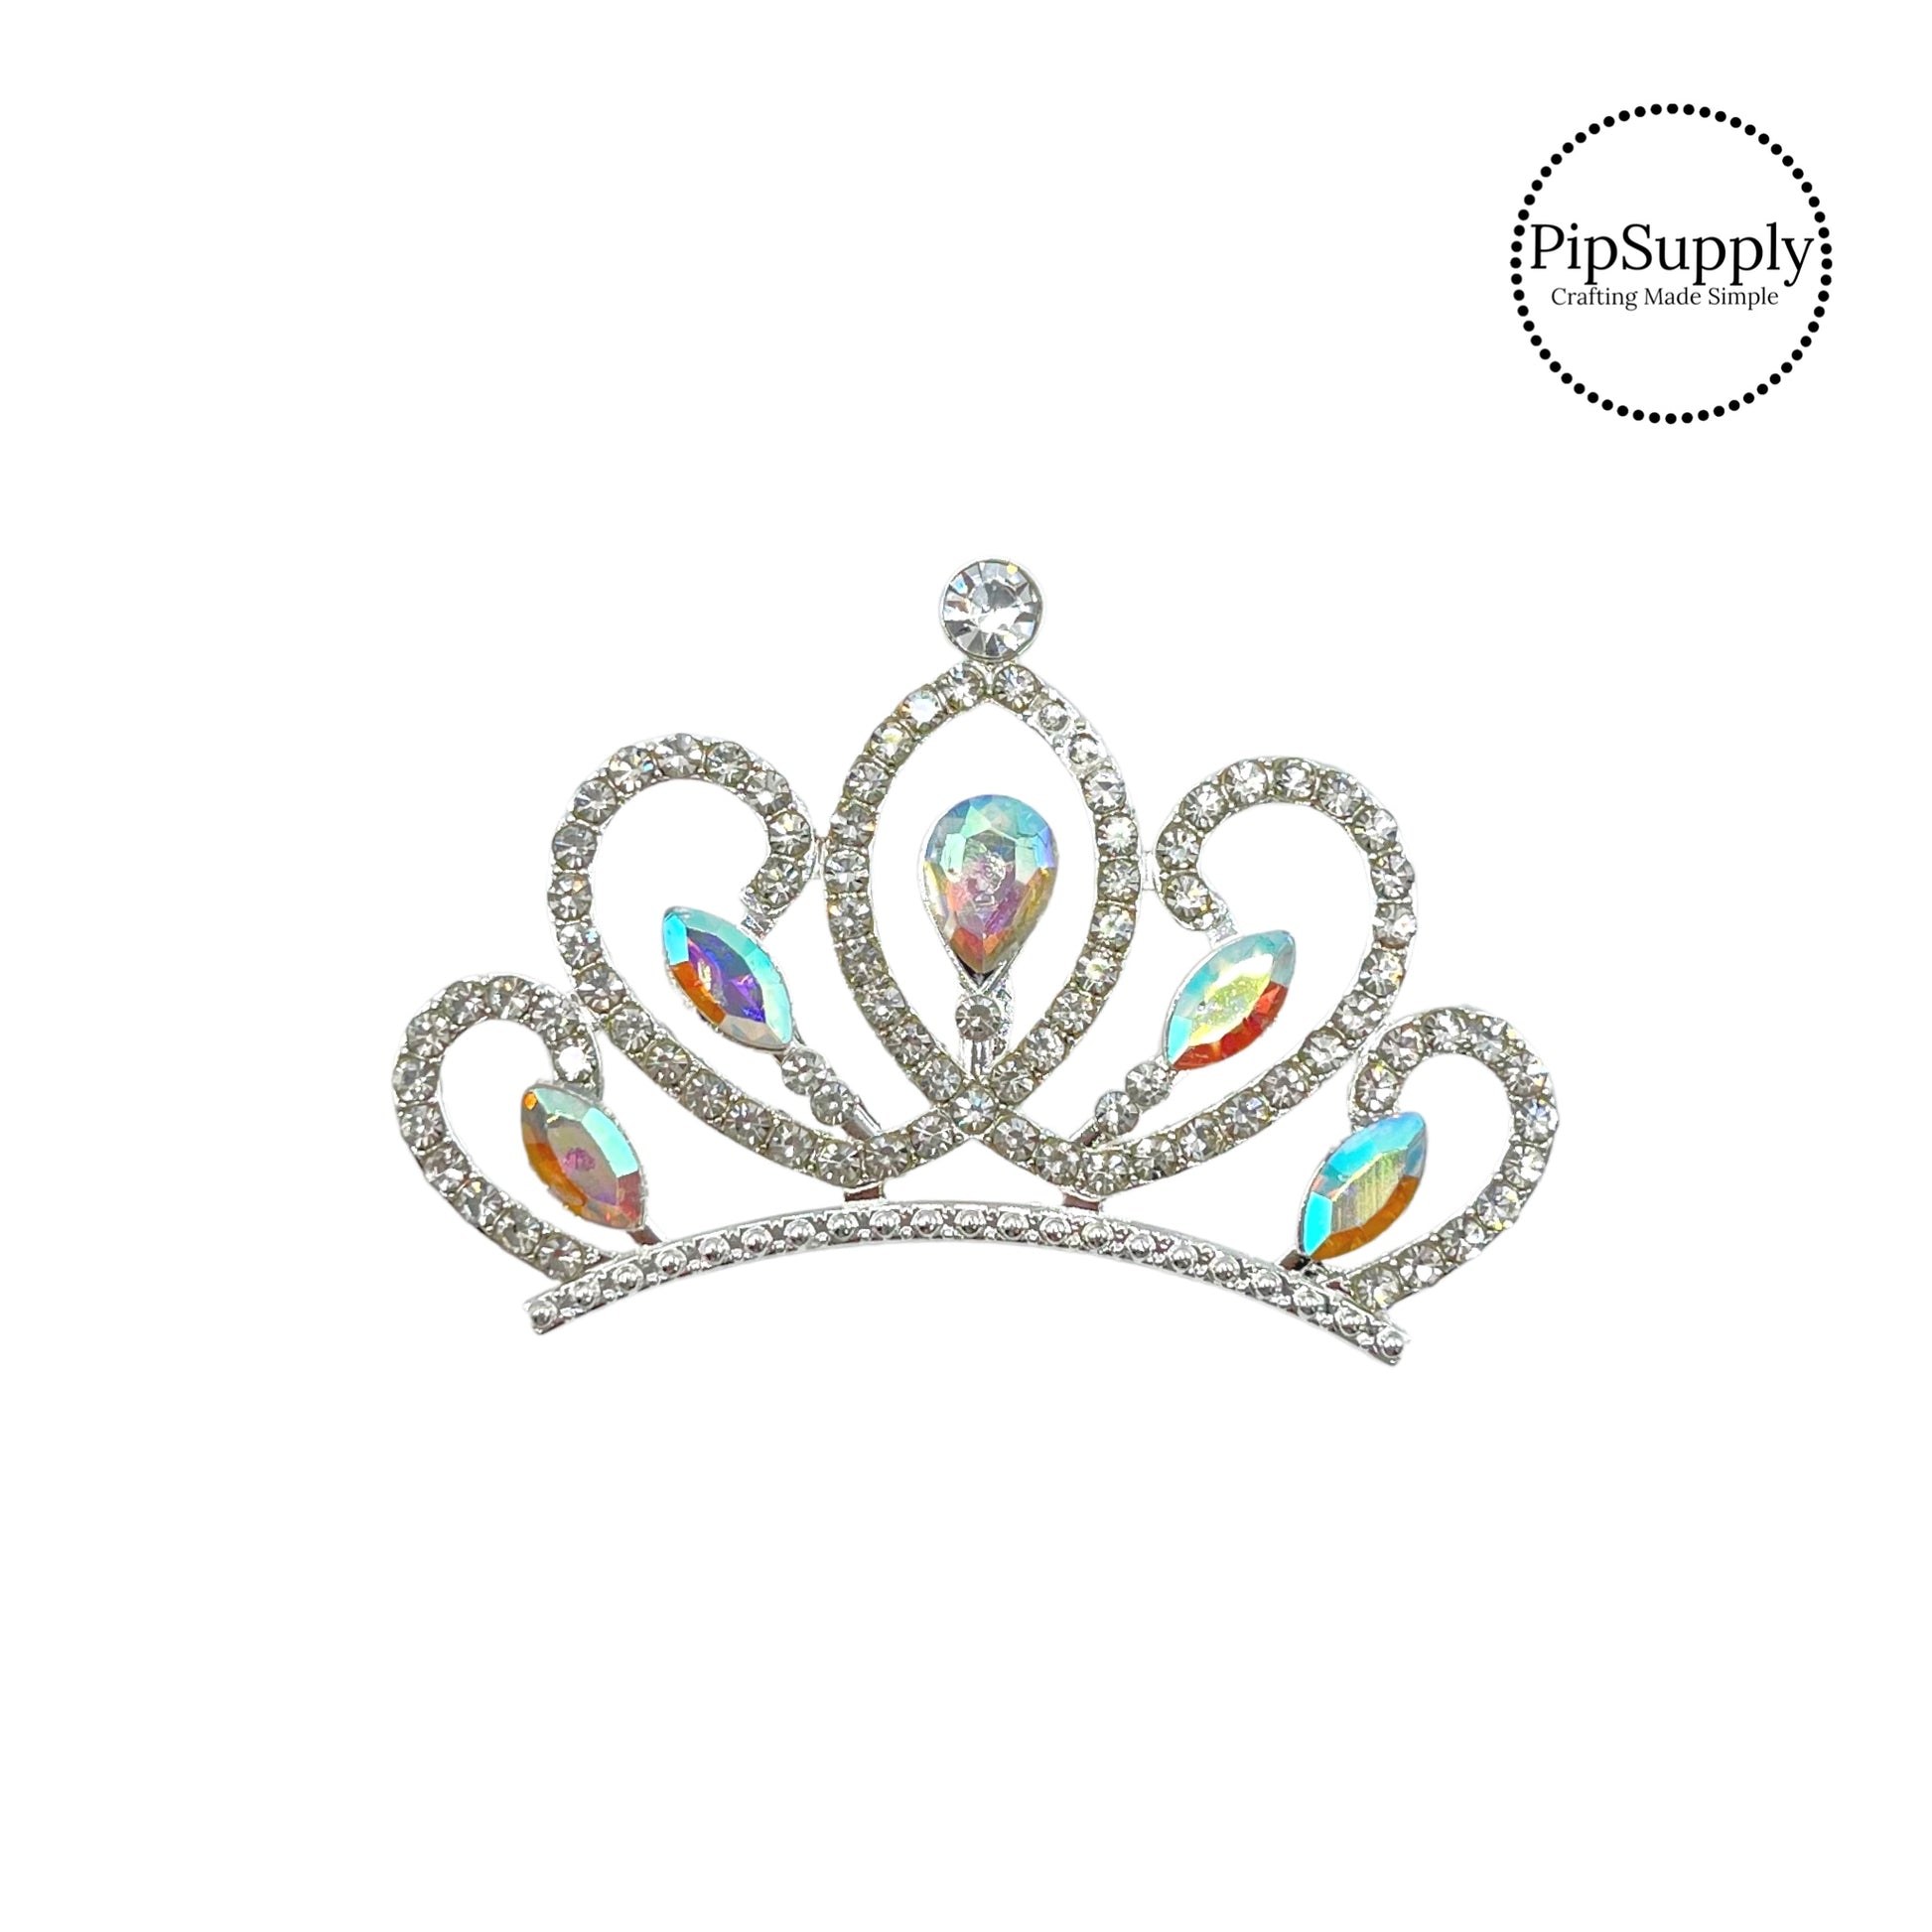 Jewels on silver iridescent princess crown embellishment